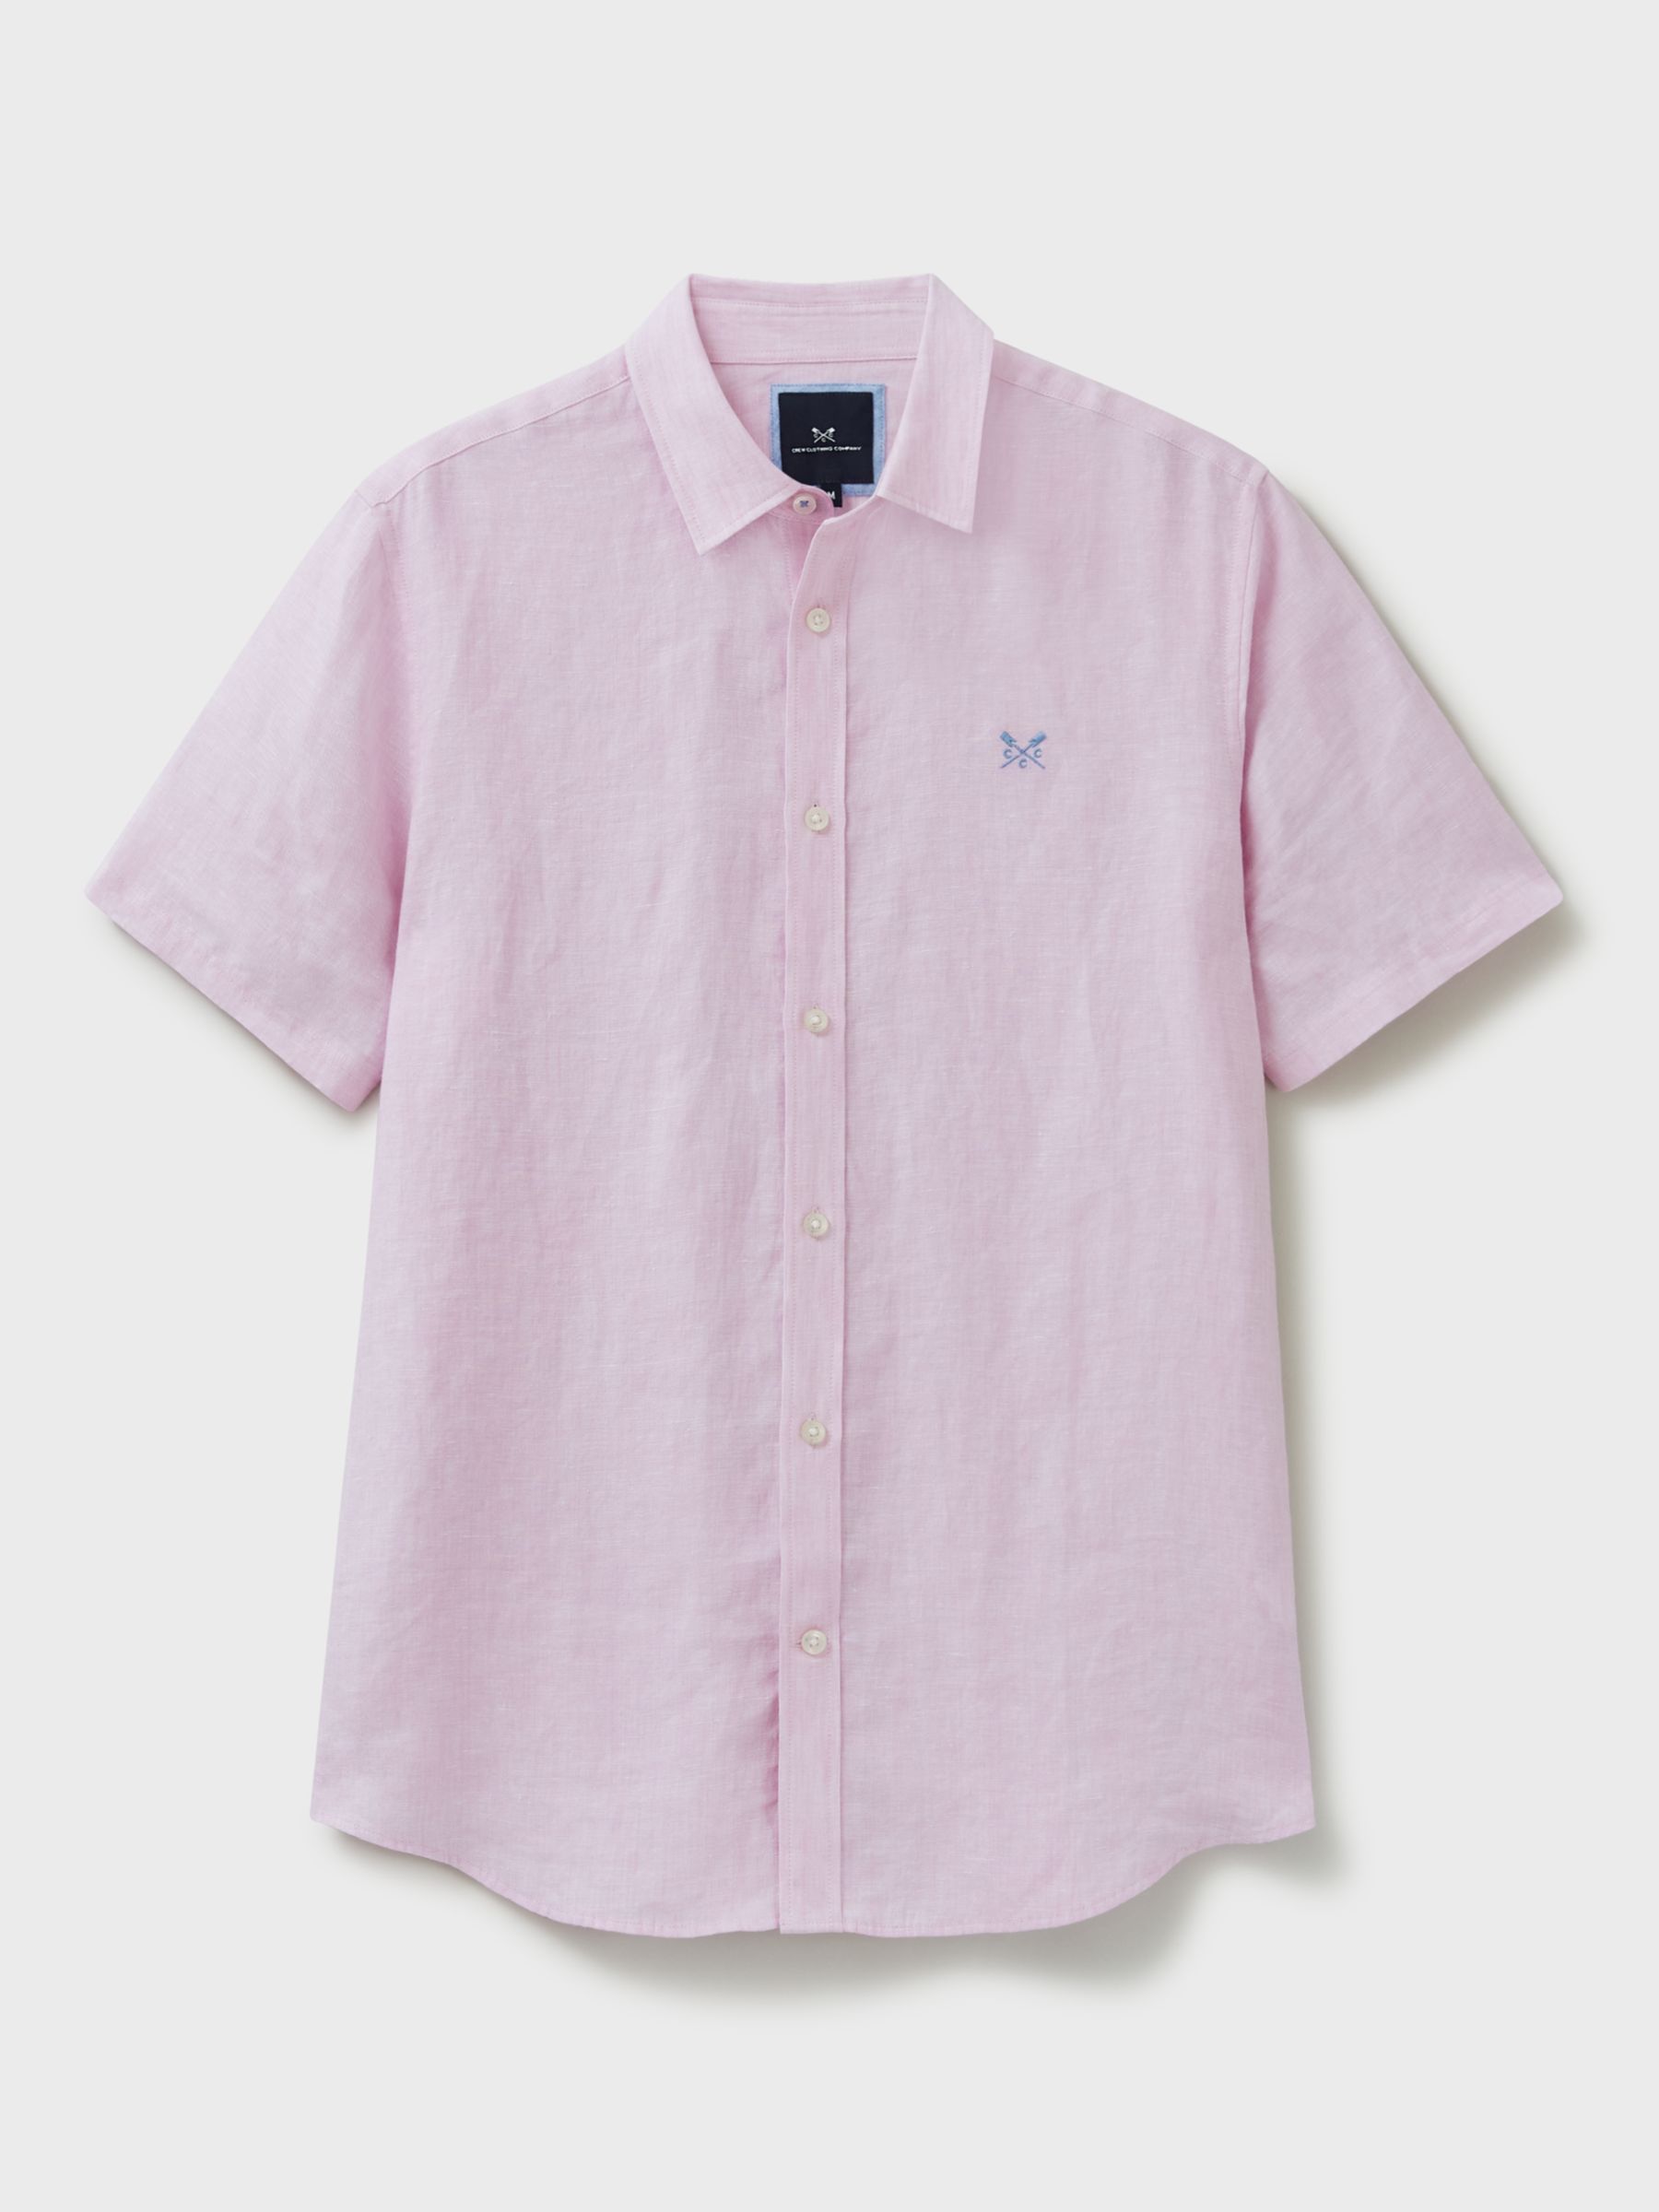 Crew Clothing Linen Short Sleeve Shirt, Pastel Pink, XS